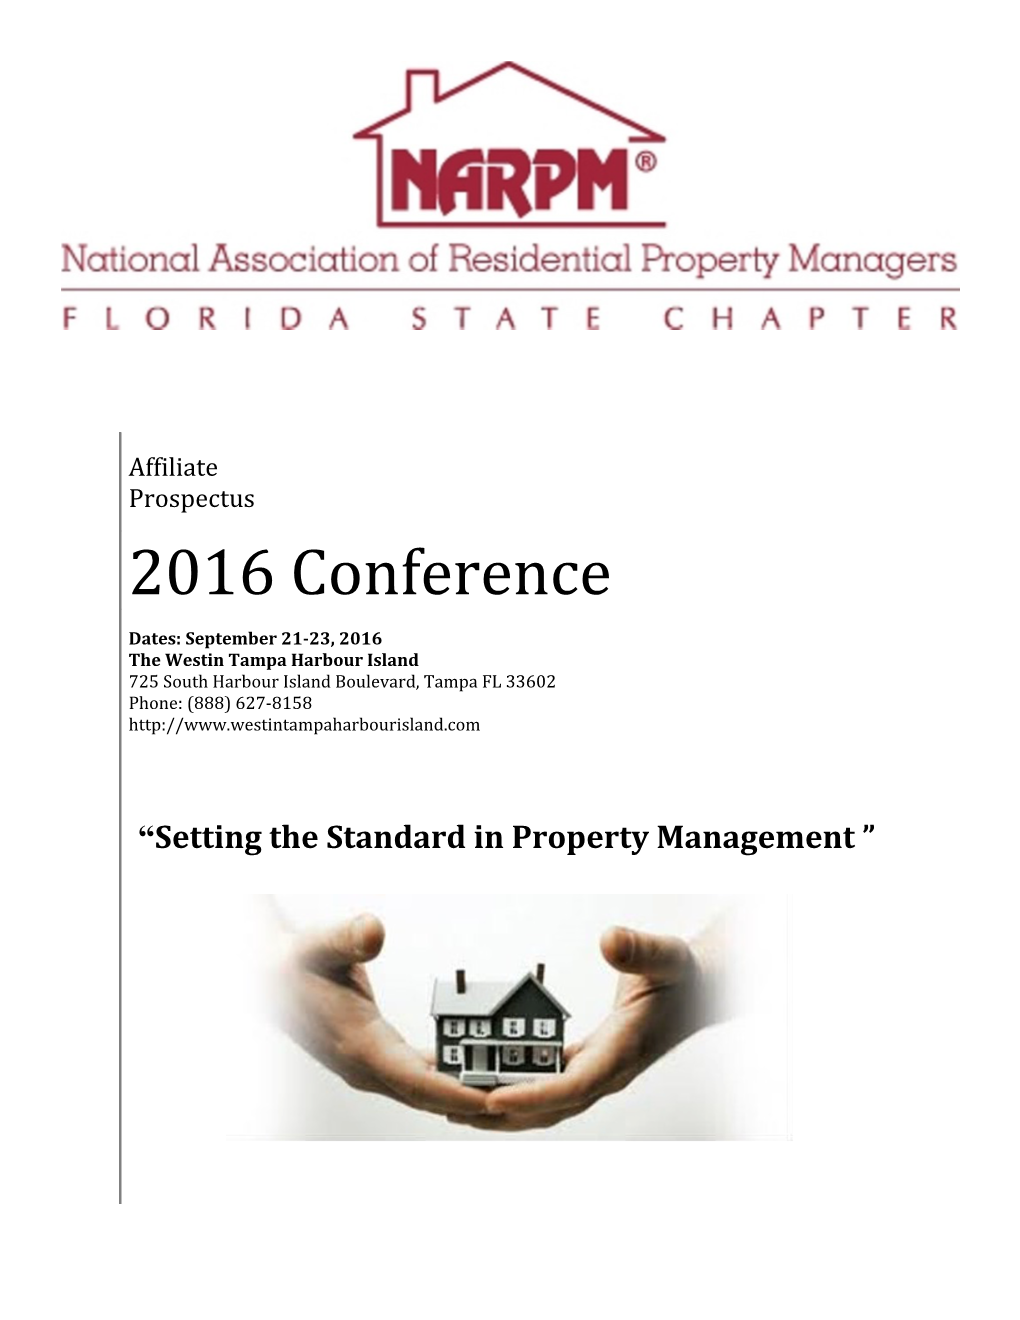 Narpm Florida State Chapter Affiliate Prospectus 2016